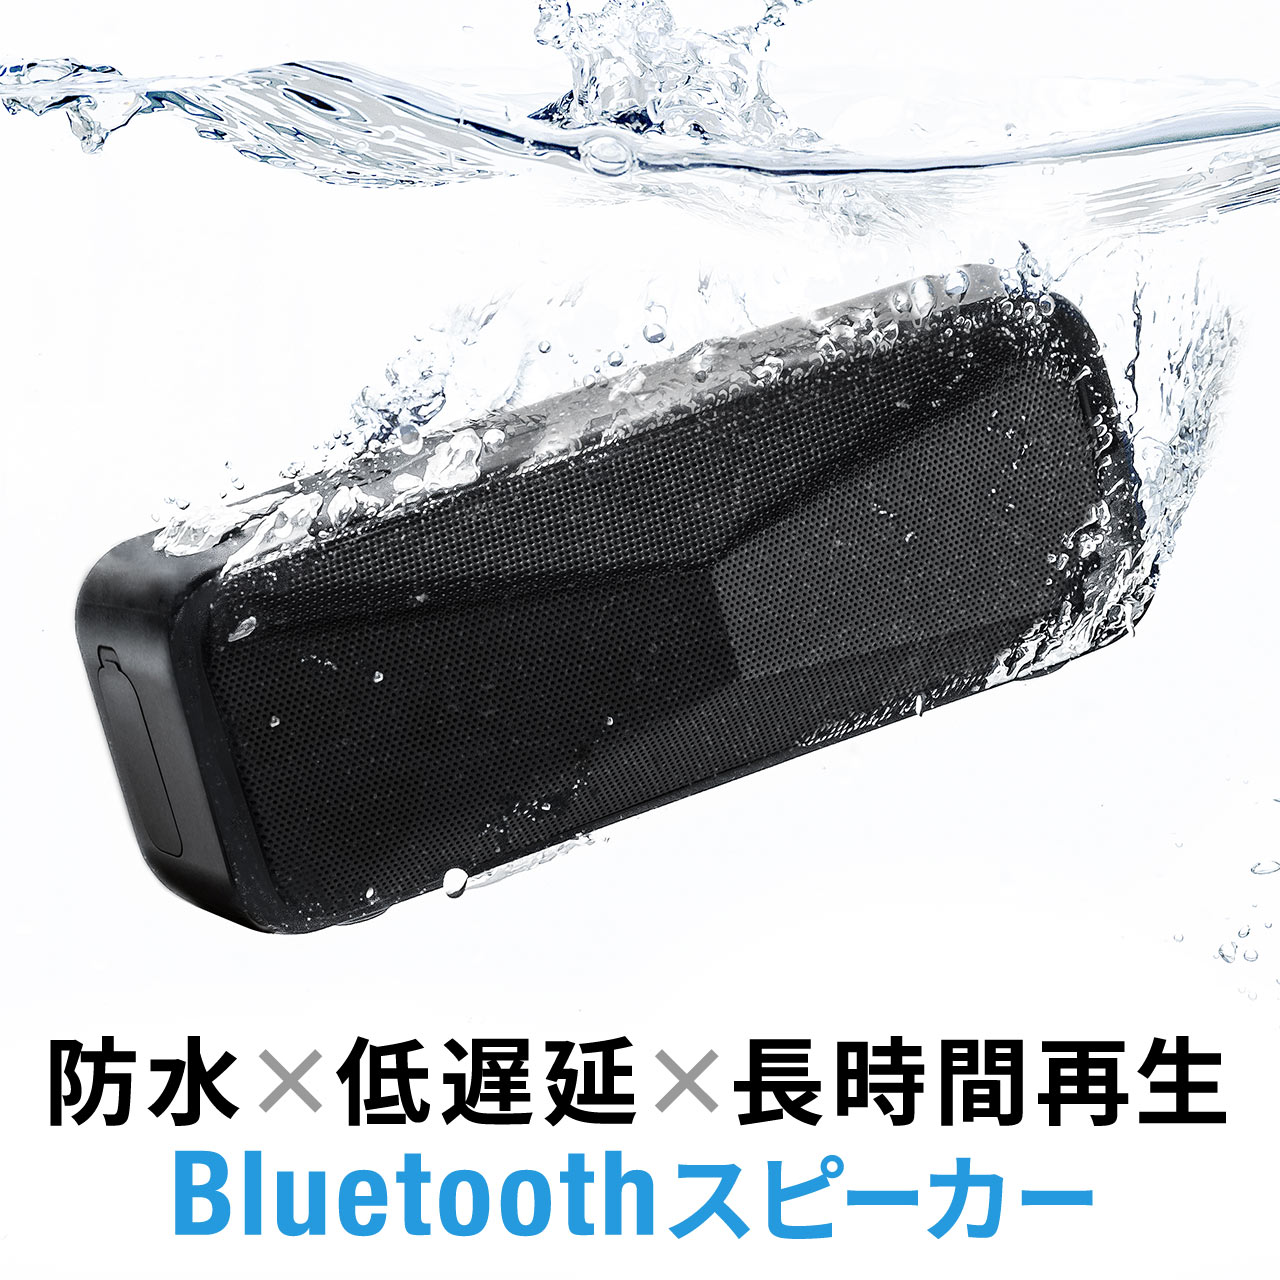 Bluetooth スピーカー ワイヤレススピーカー 防水 重低音 ポータブル